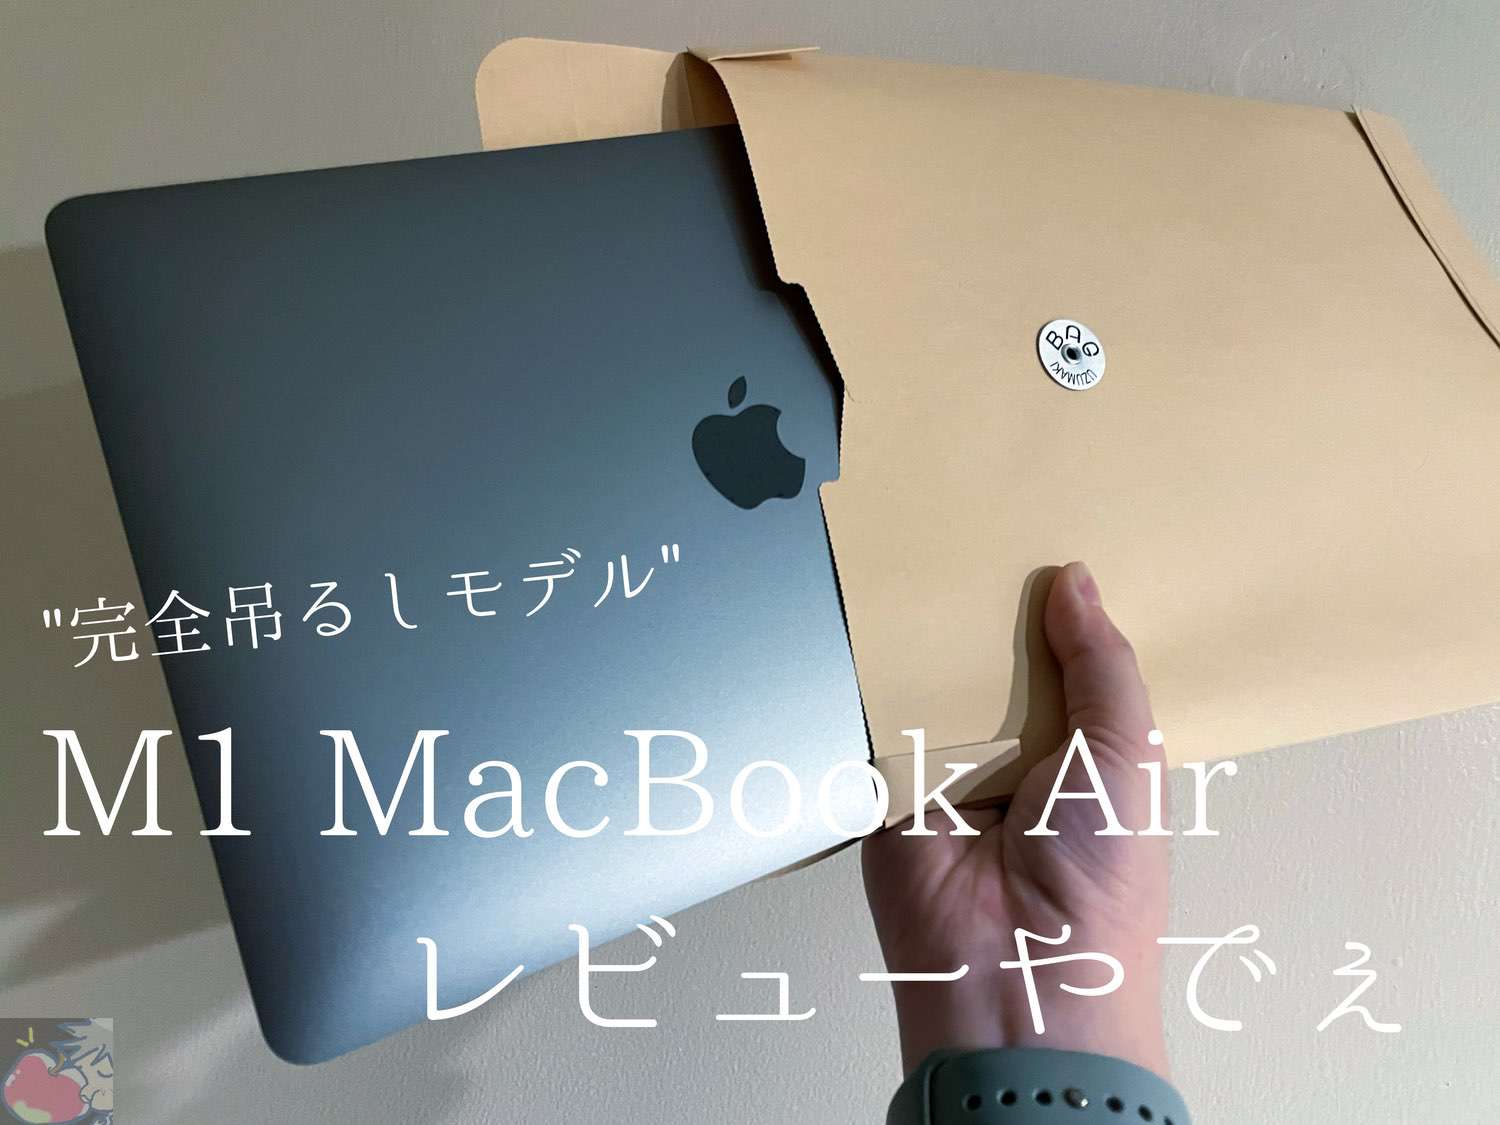 M1 MacBook Air完全吊るしモデルレビュー「確かに凄いけど、あまり言